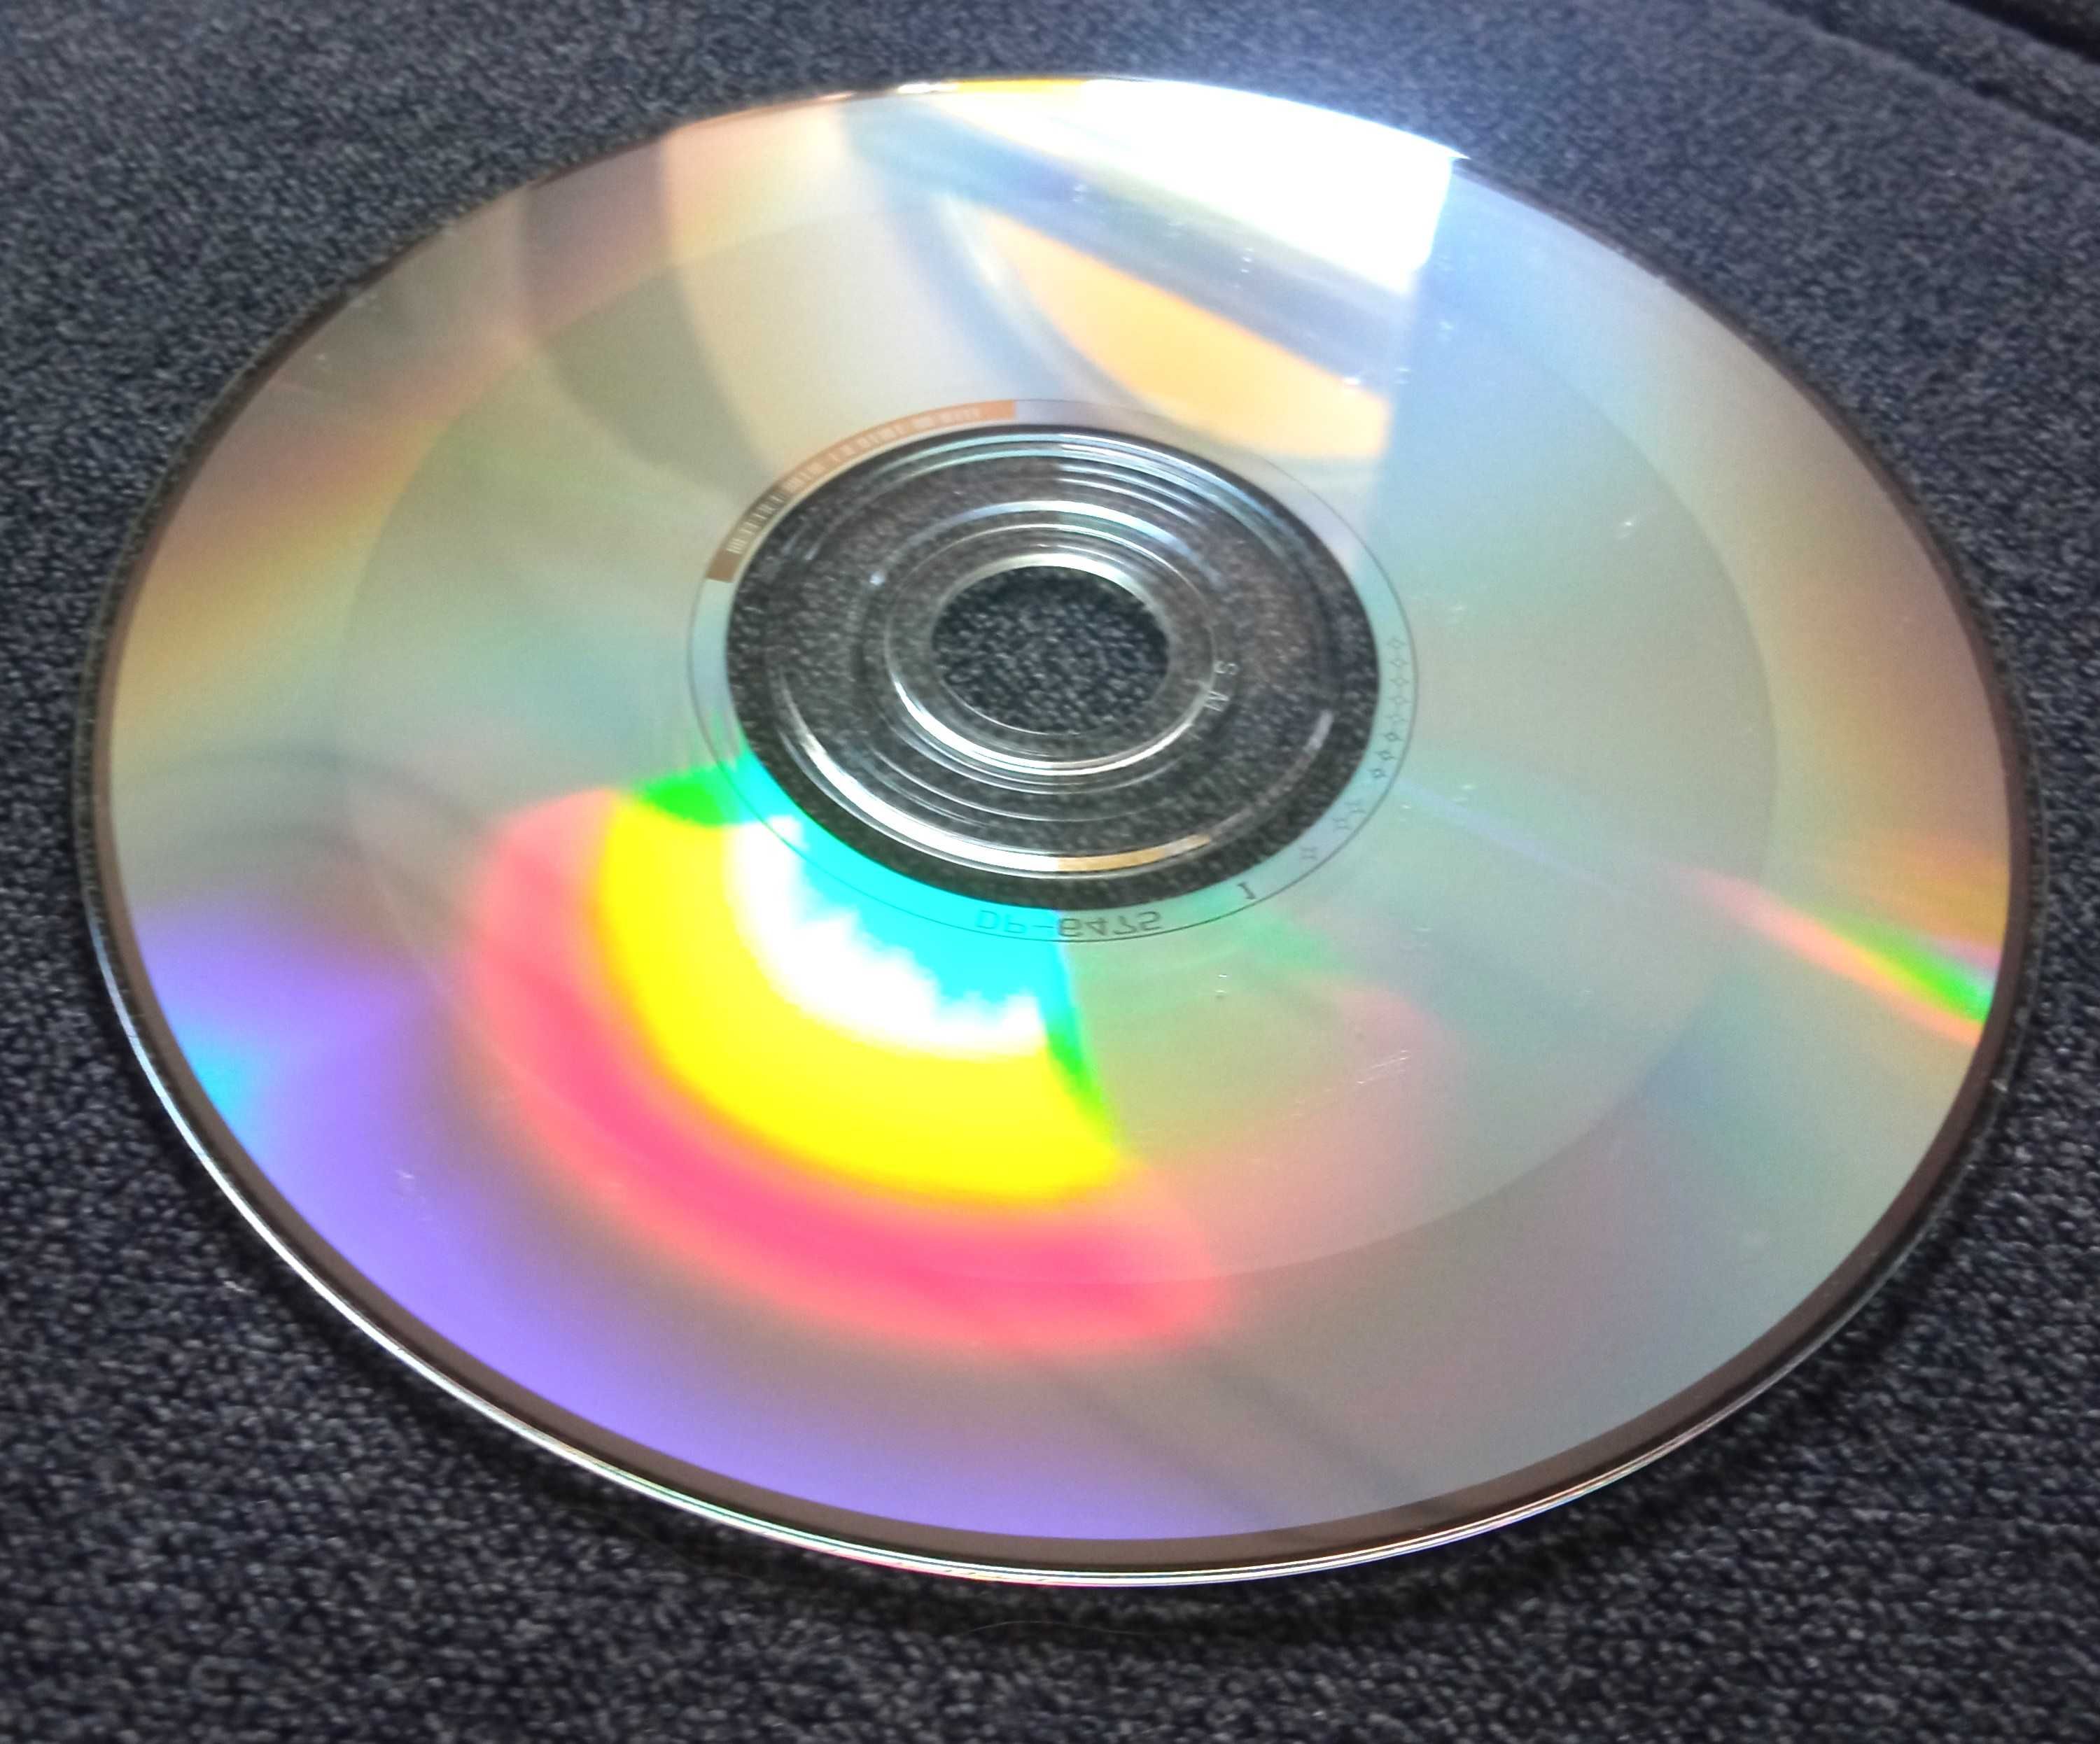 Alice In Chains Jar Of Flies CD 1press Japan Obi